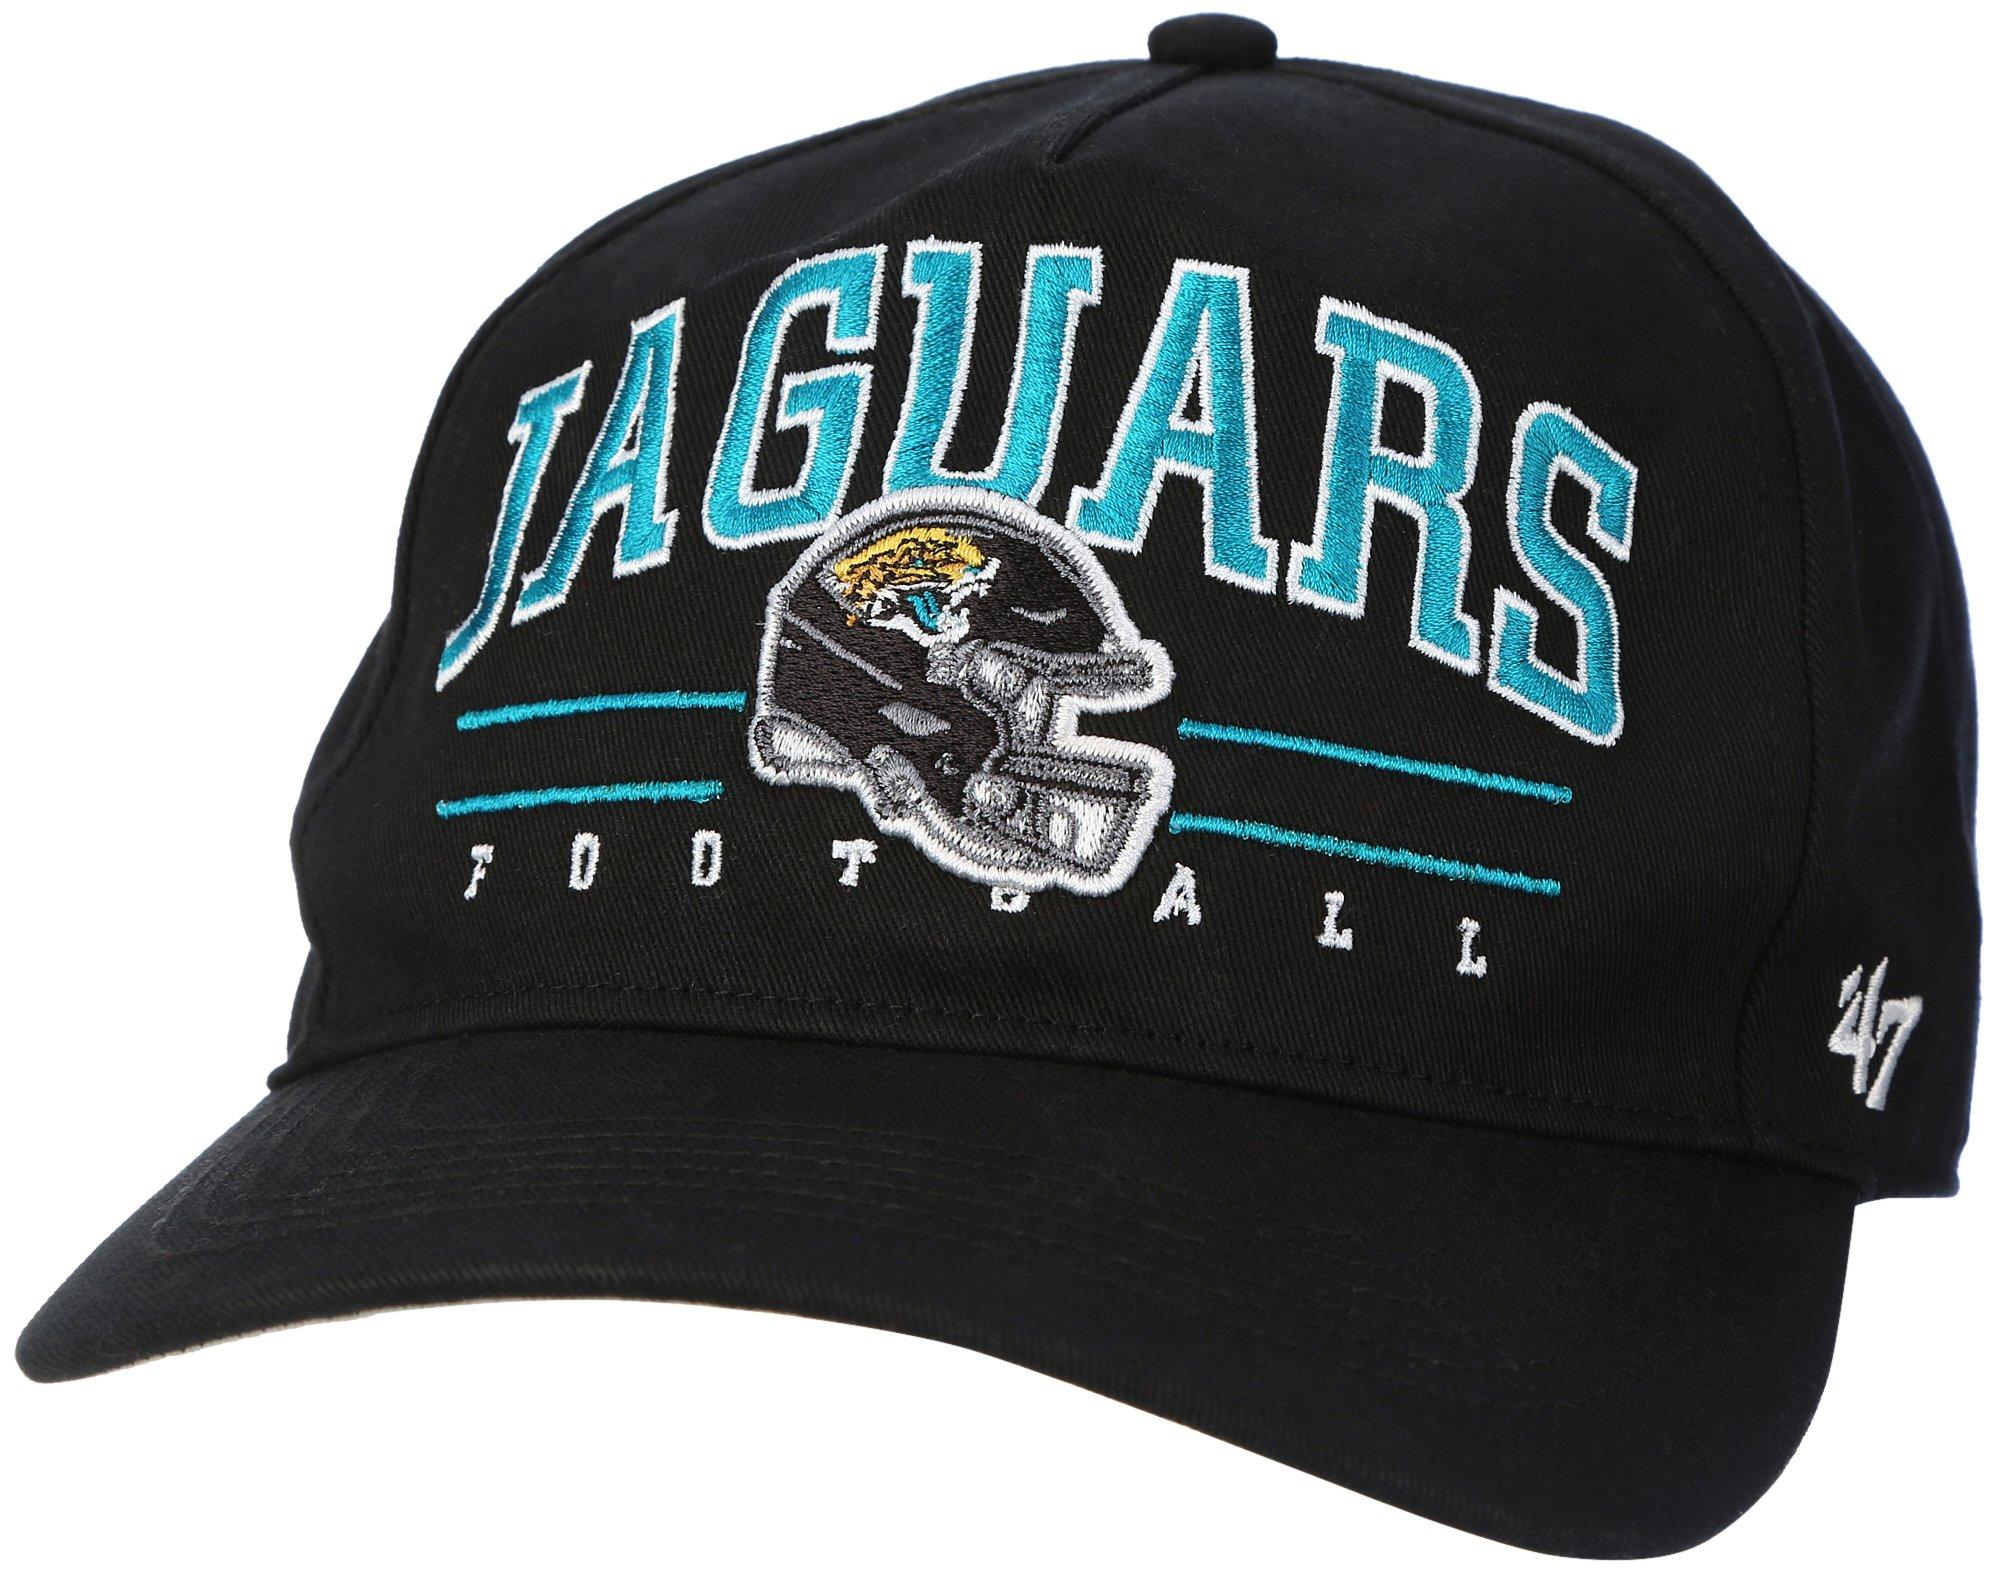 Jacksonville Jaguars Snap-Back Baseball Cap